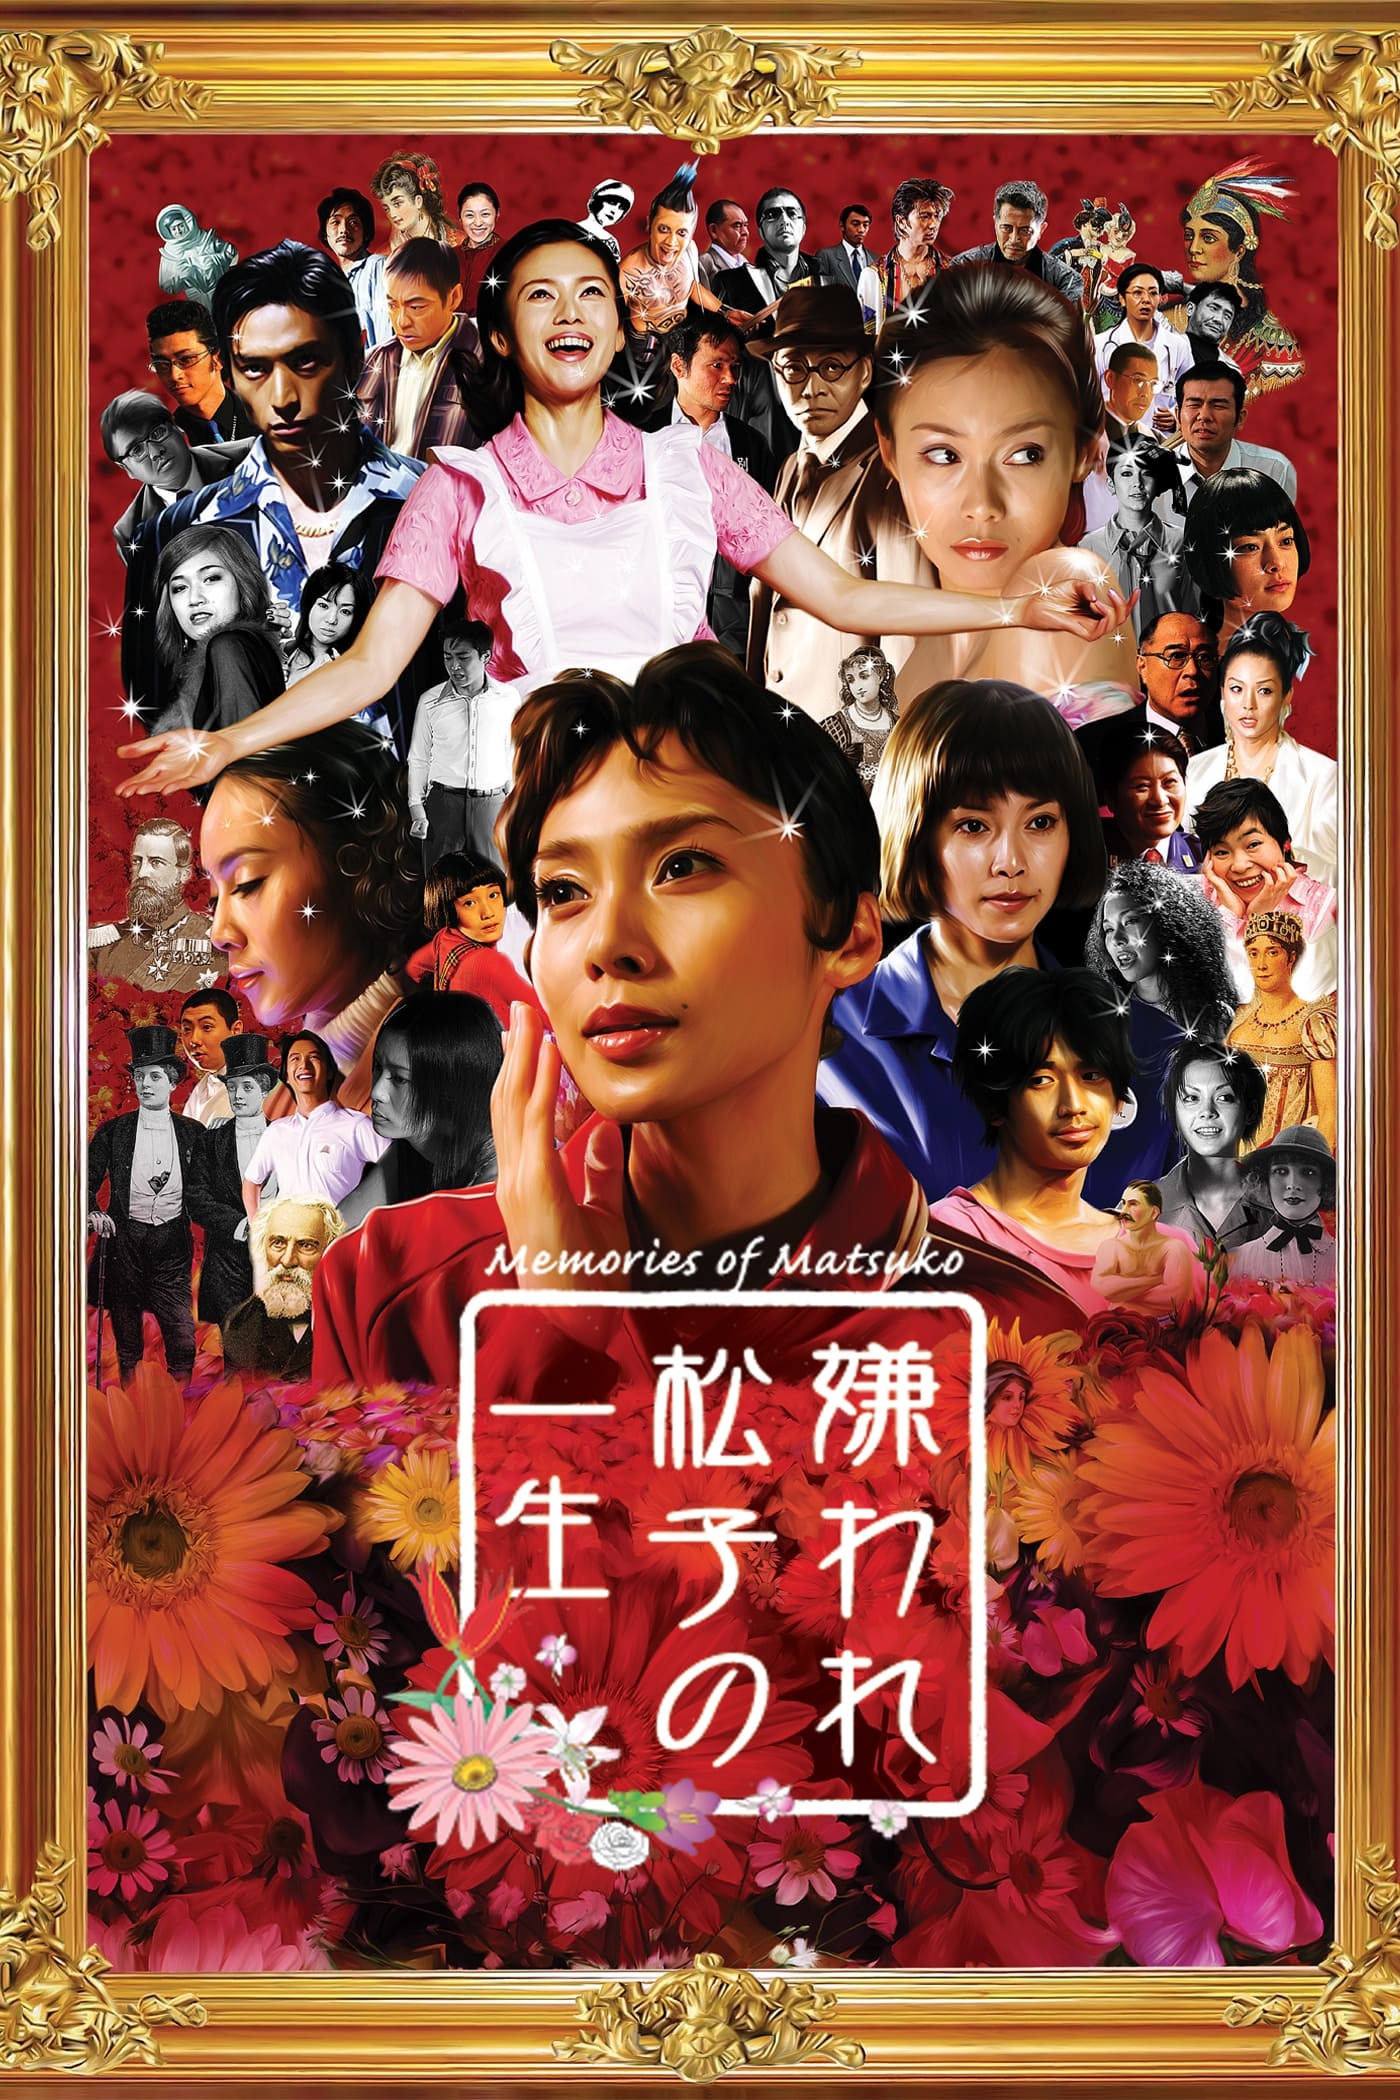 Memories of Matsuko - Memories of Matsuko (2006)